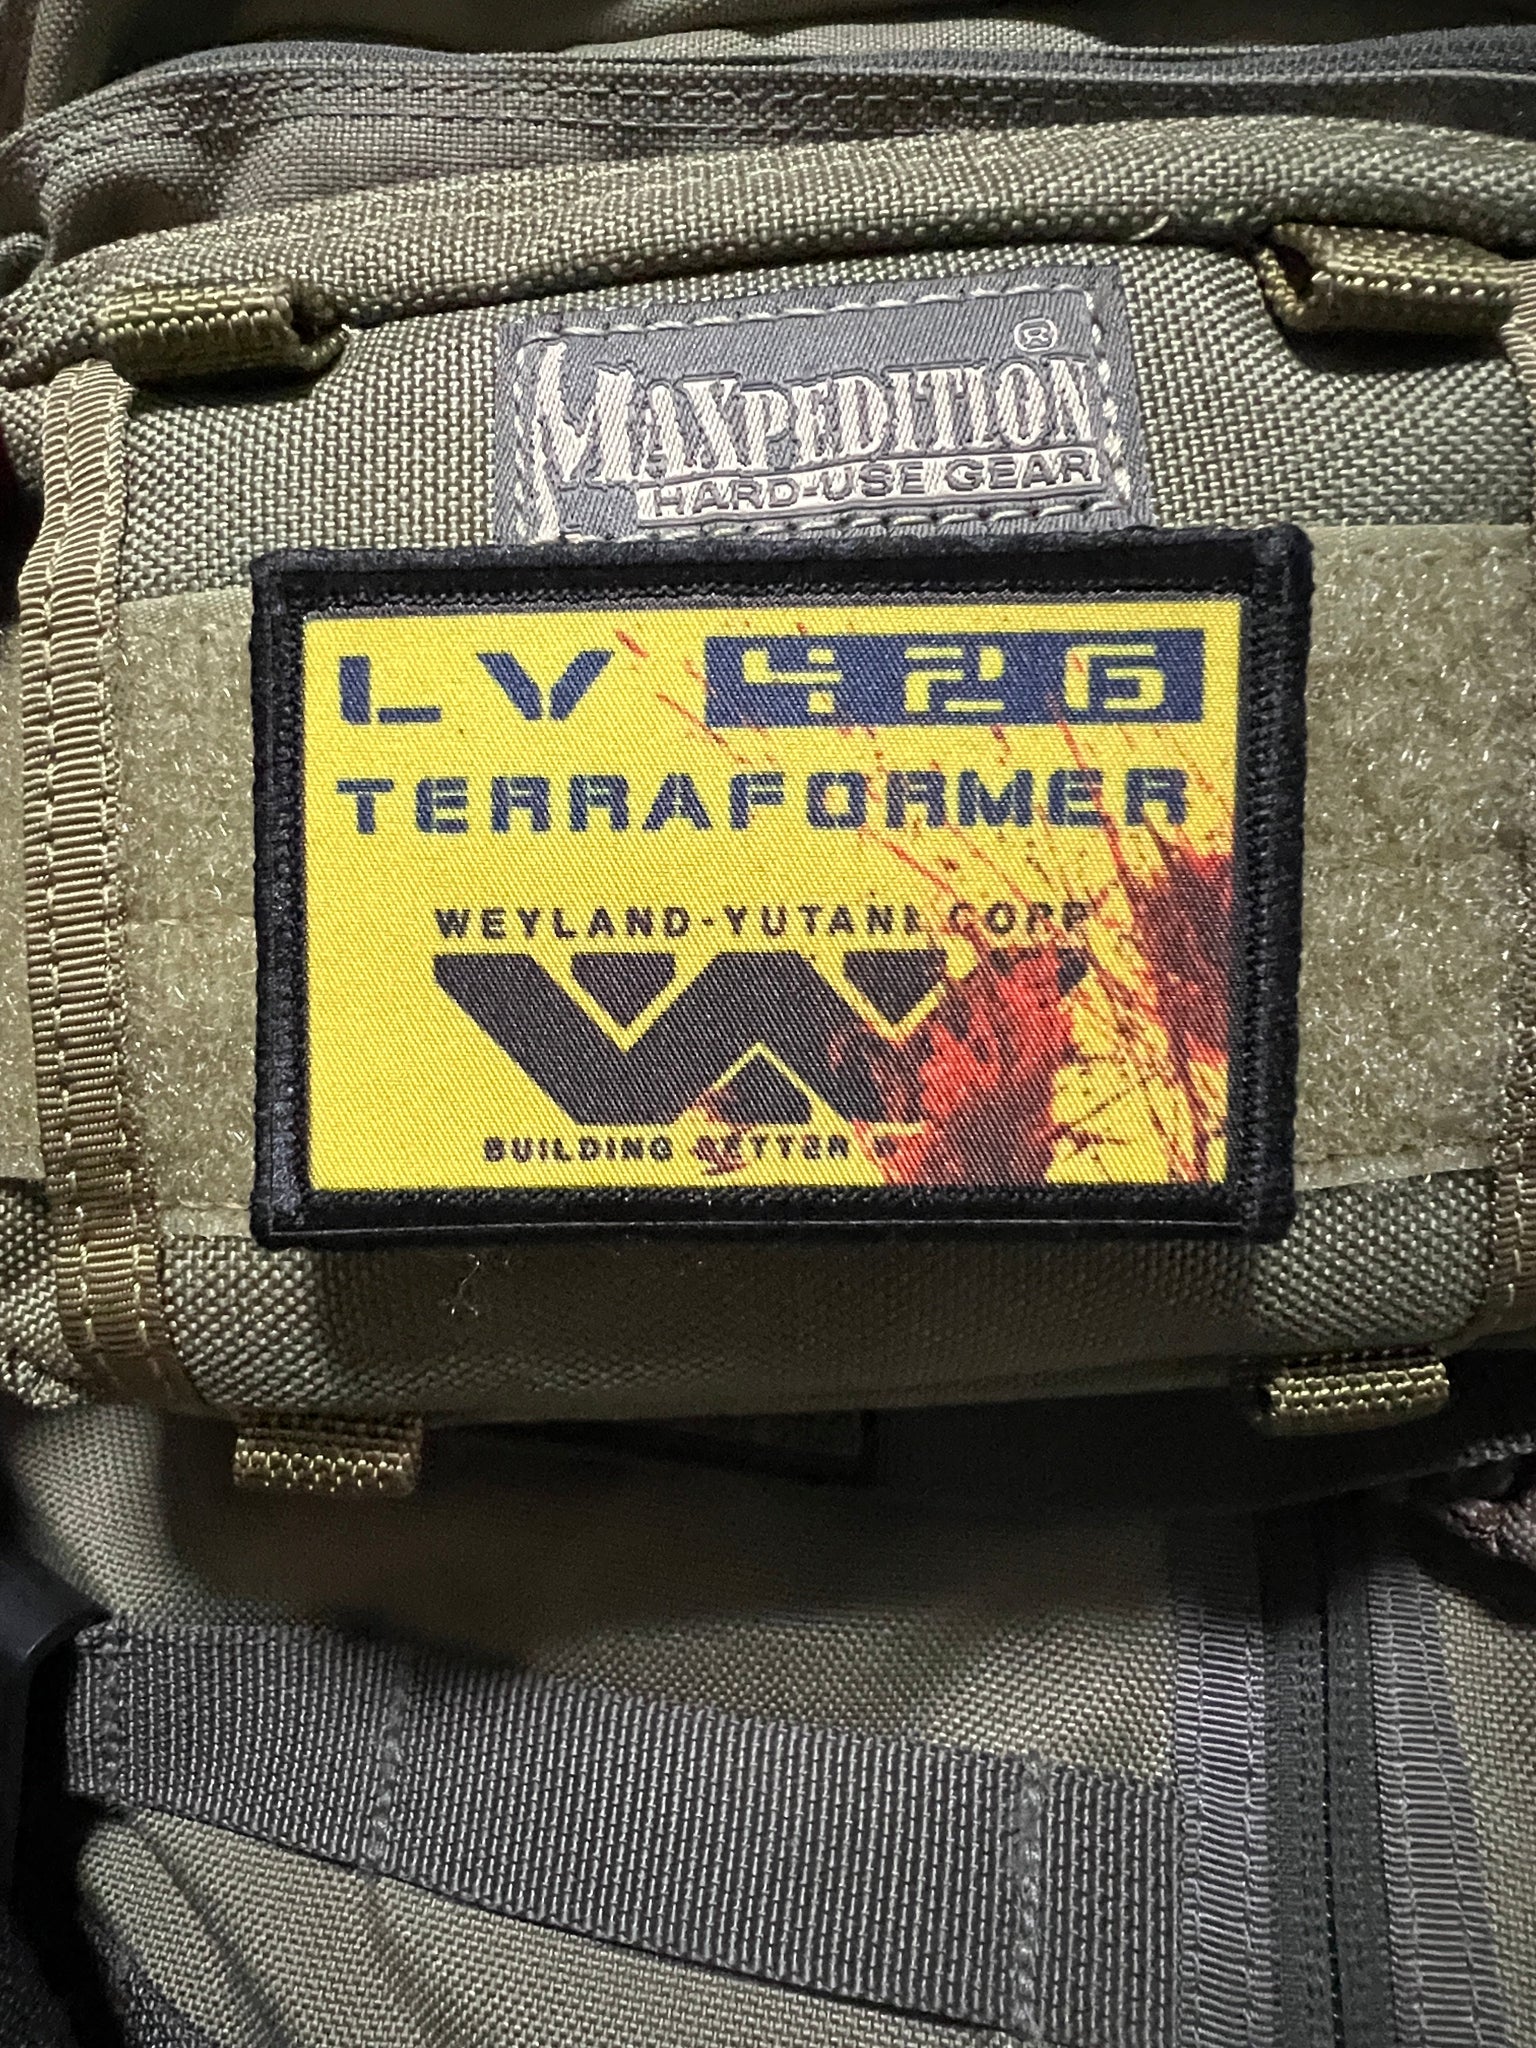 LV-426 Terraformer Weyland Yutani Velcro Morale Patch